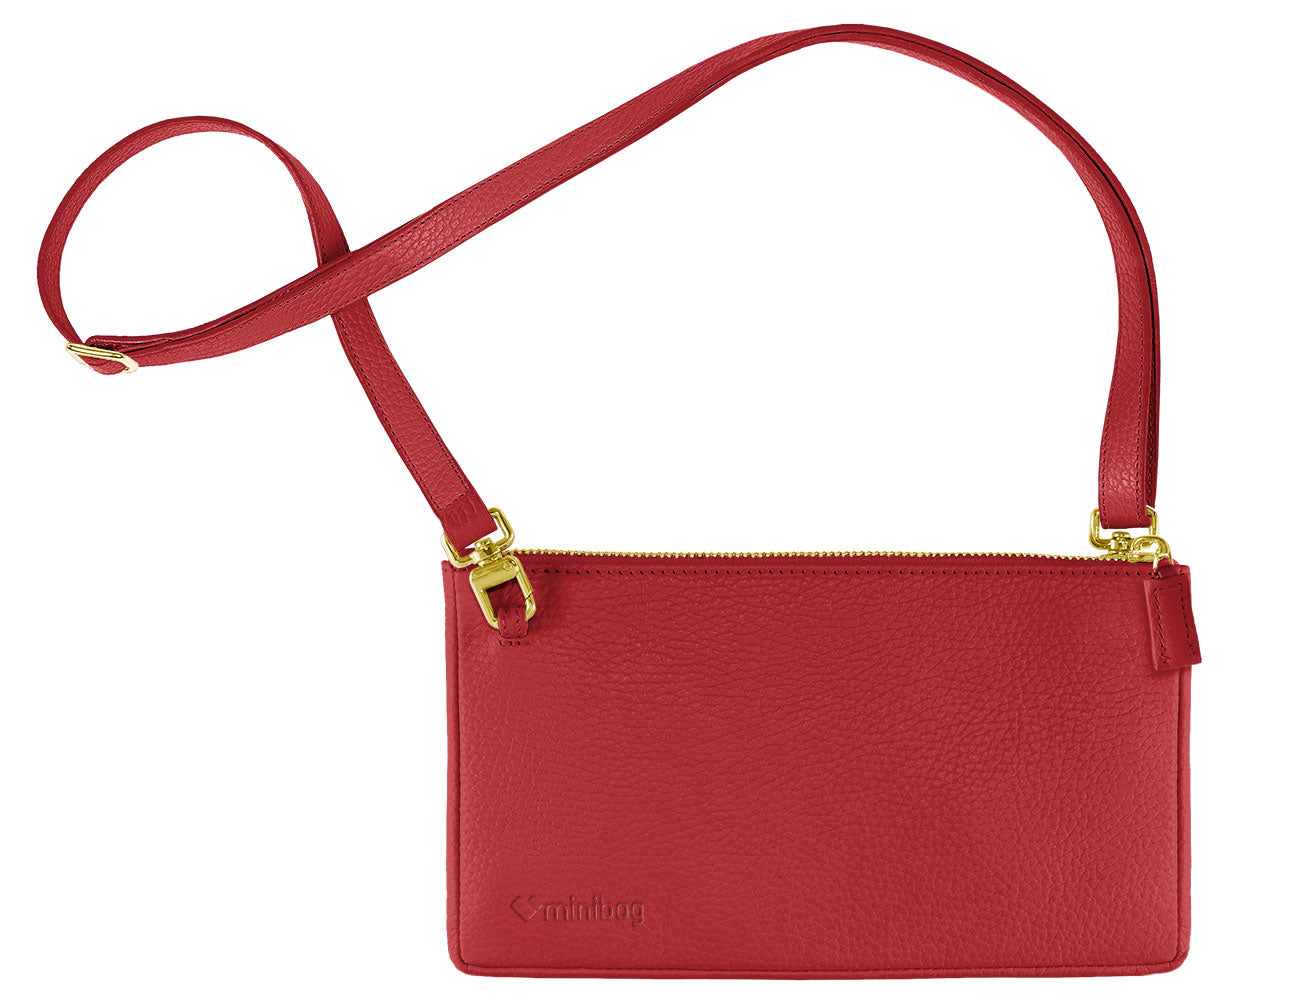 minibag red Edition GOLD, Ledertasche rot, goldene Details, Umhängetasche rot mit goldenen Details